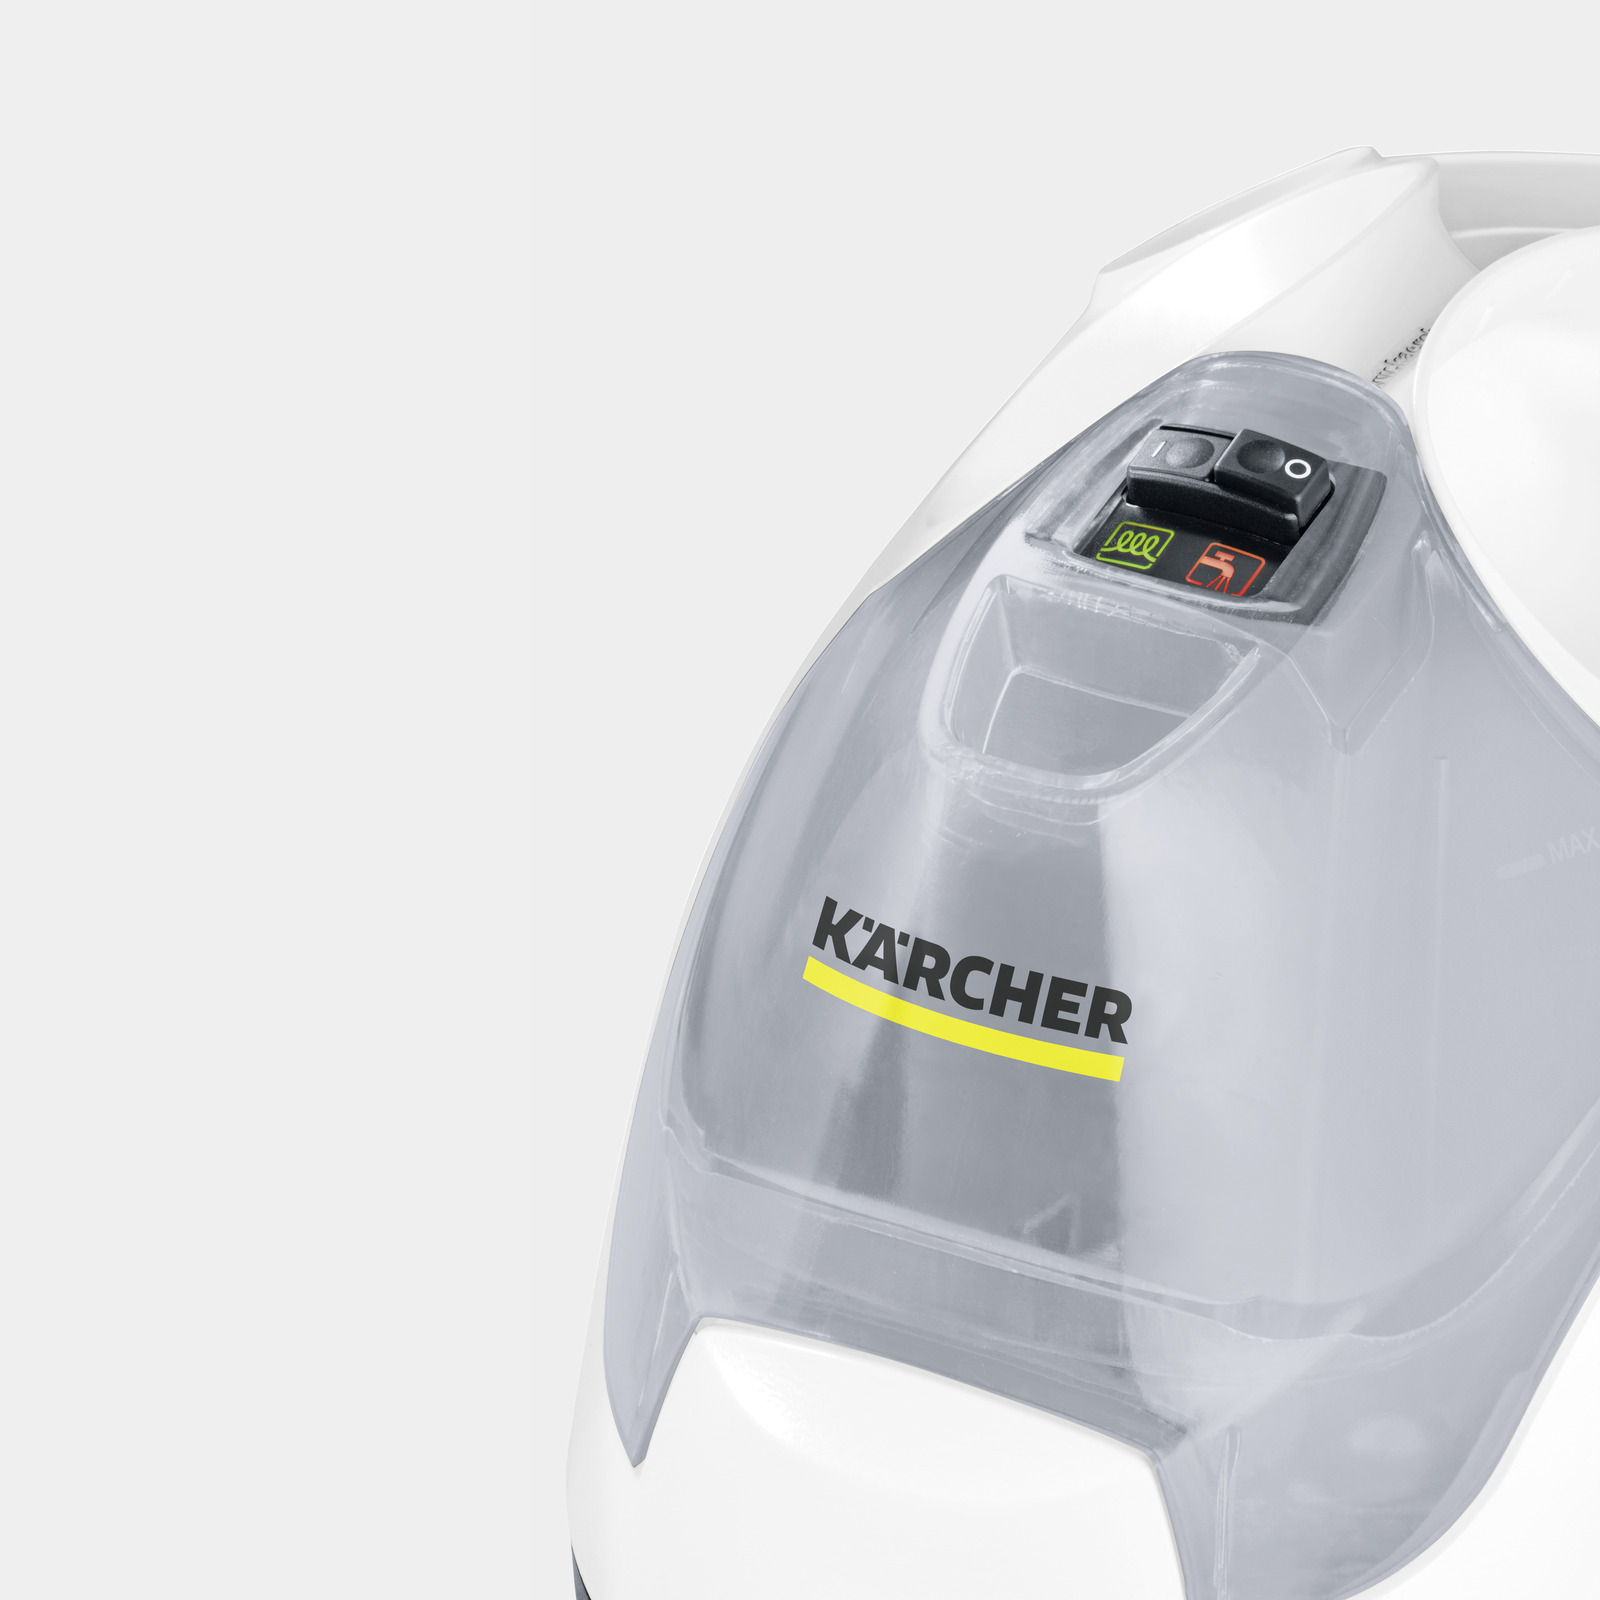 Karcher SC4 Easy Fix nettoyeur vapeur - 2000w - 3.5 bar - Garantie